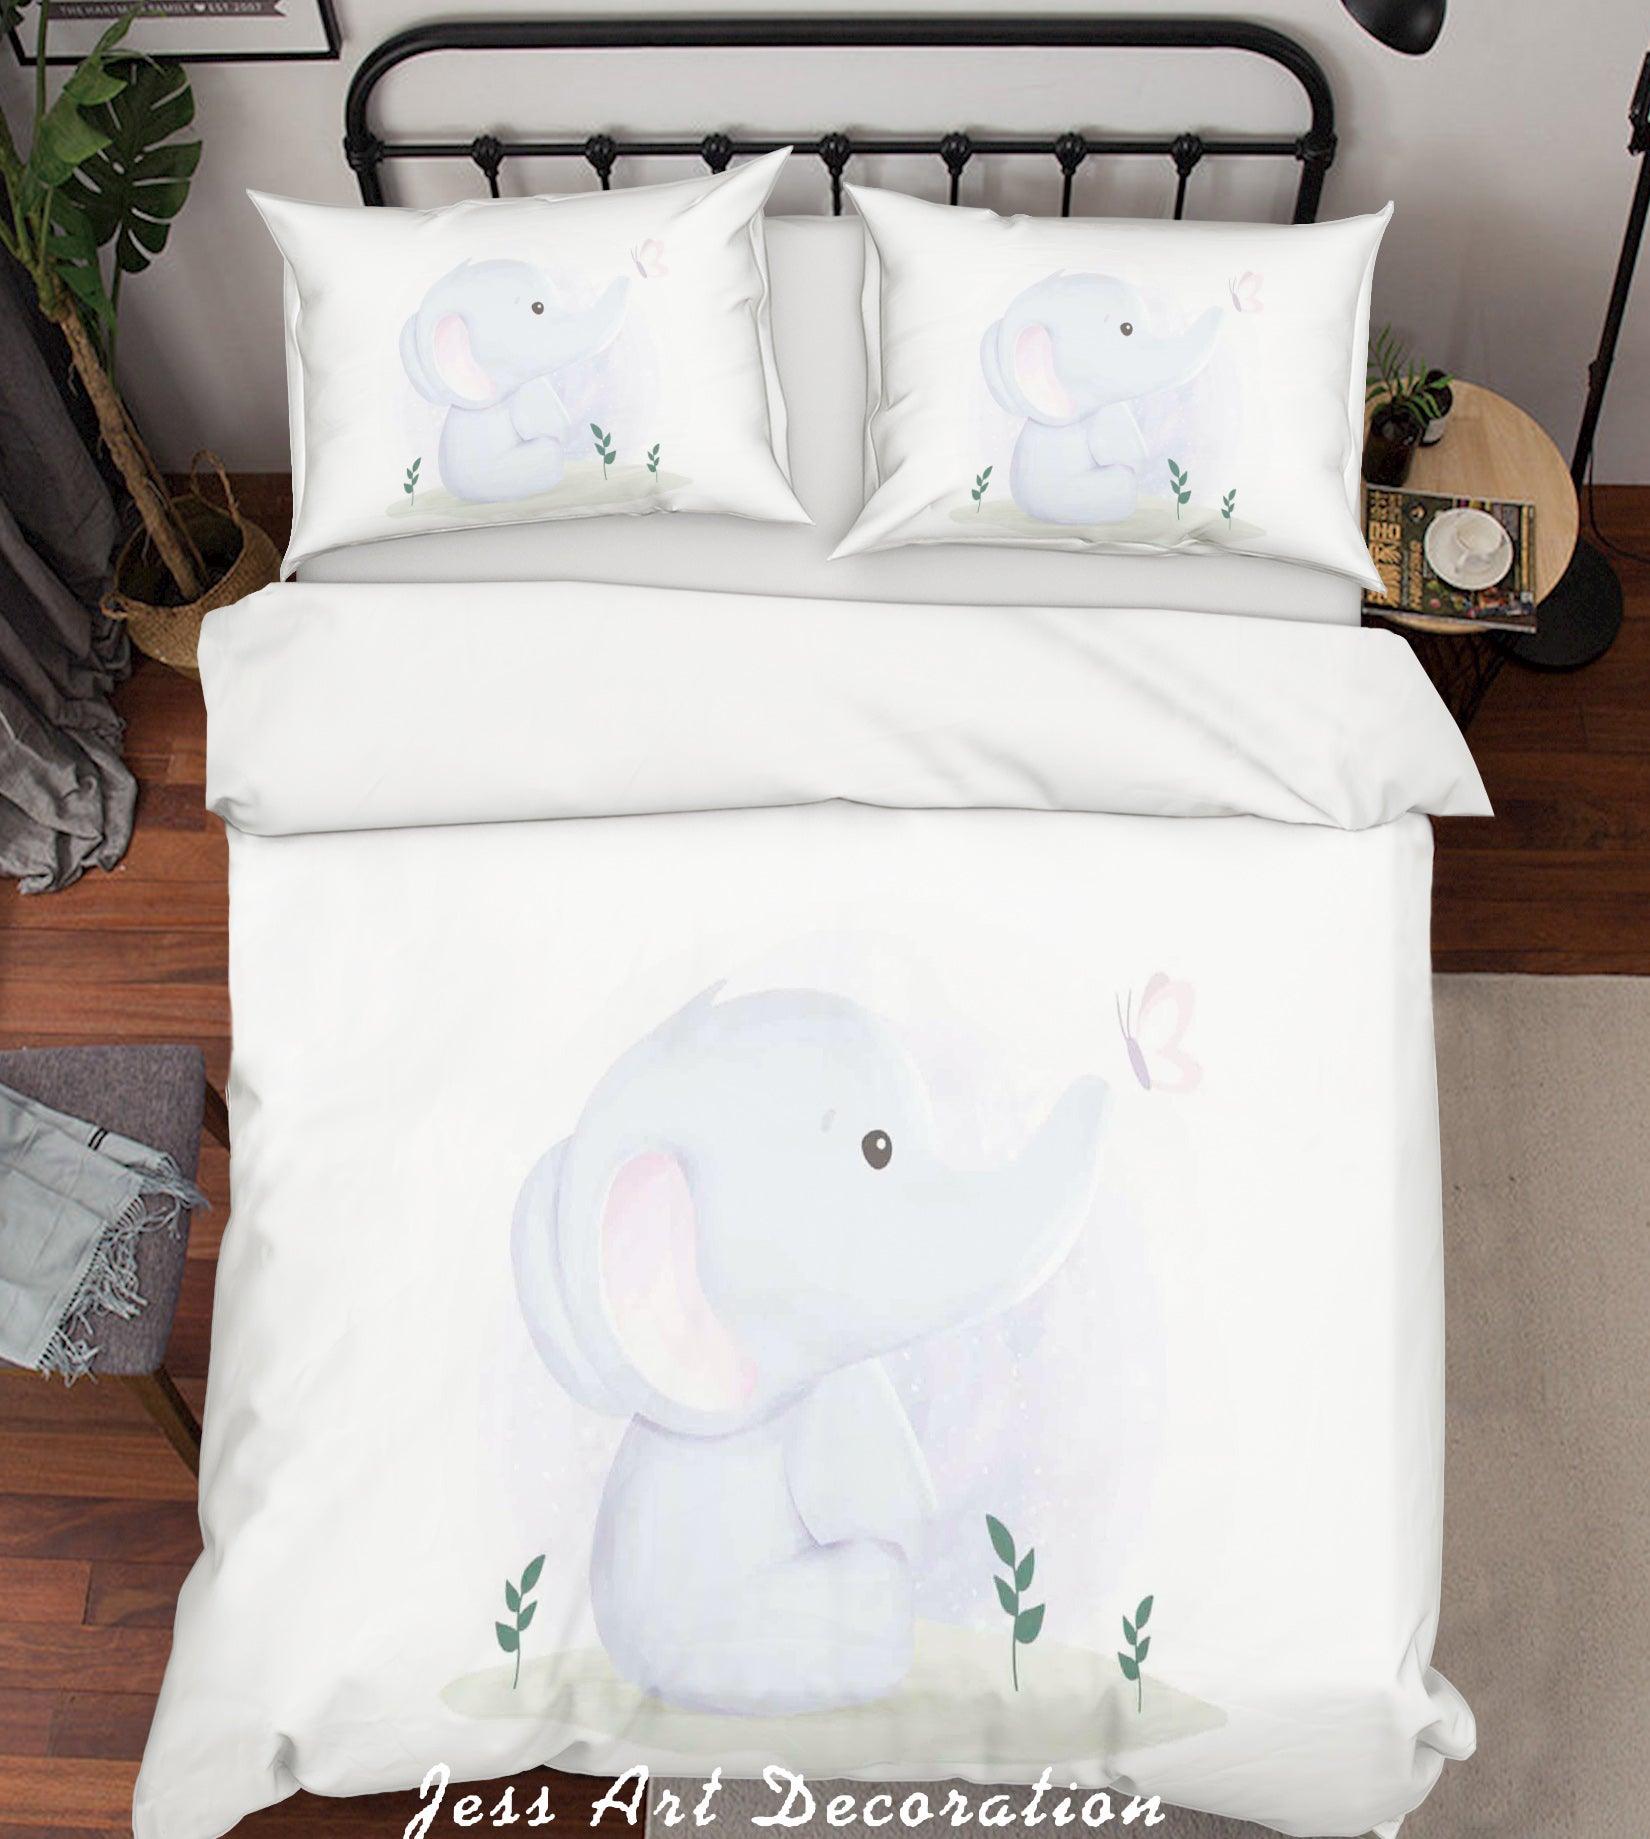 3D White Elephant Butterfly Quilt Cover Set Bedding Set Duvet Cover Pillowcases SF11- Jess Art Decoration